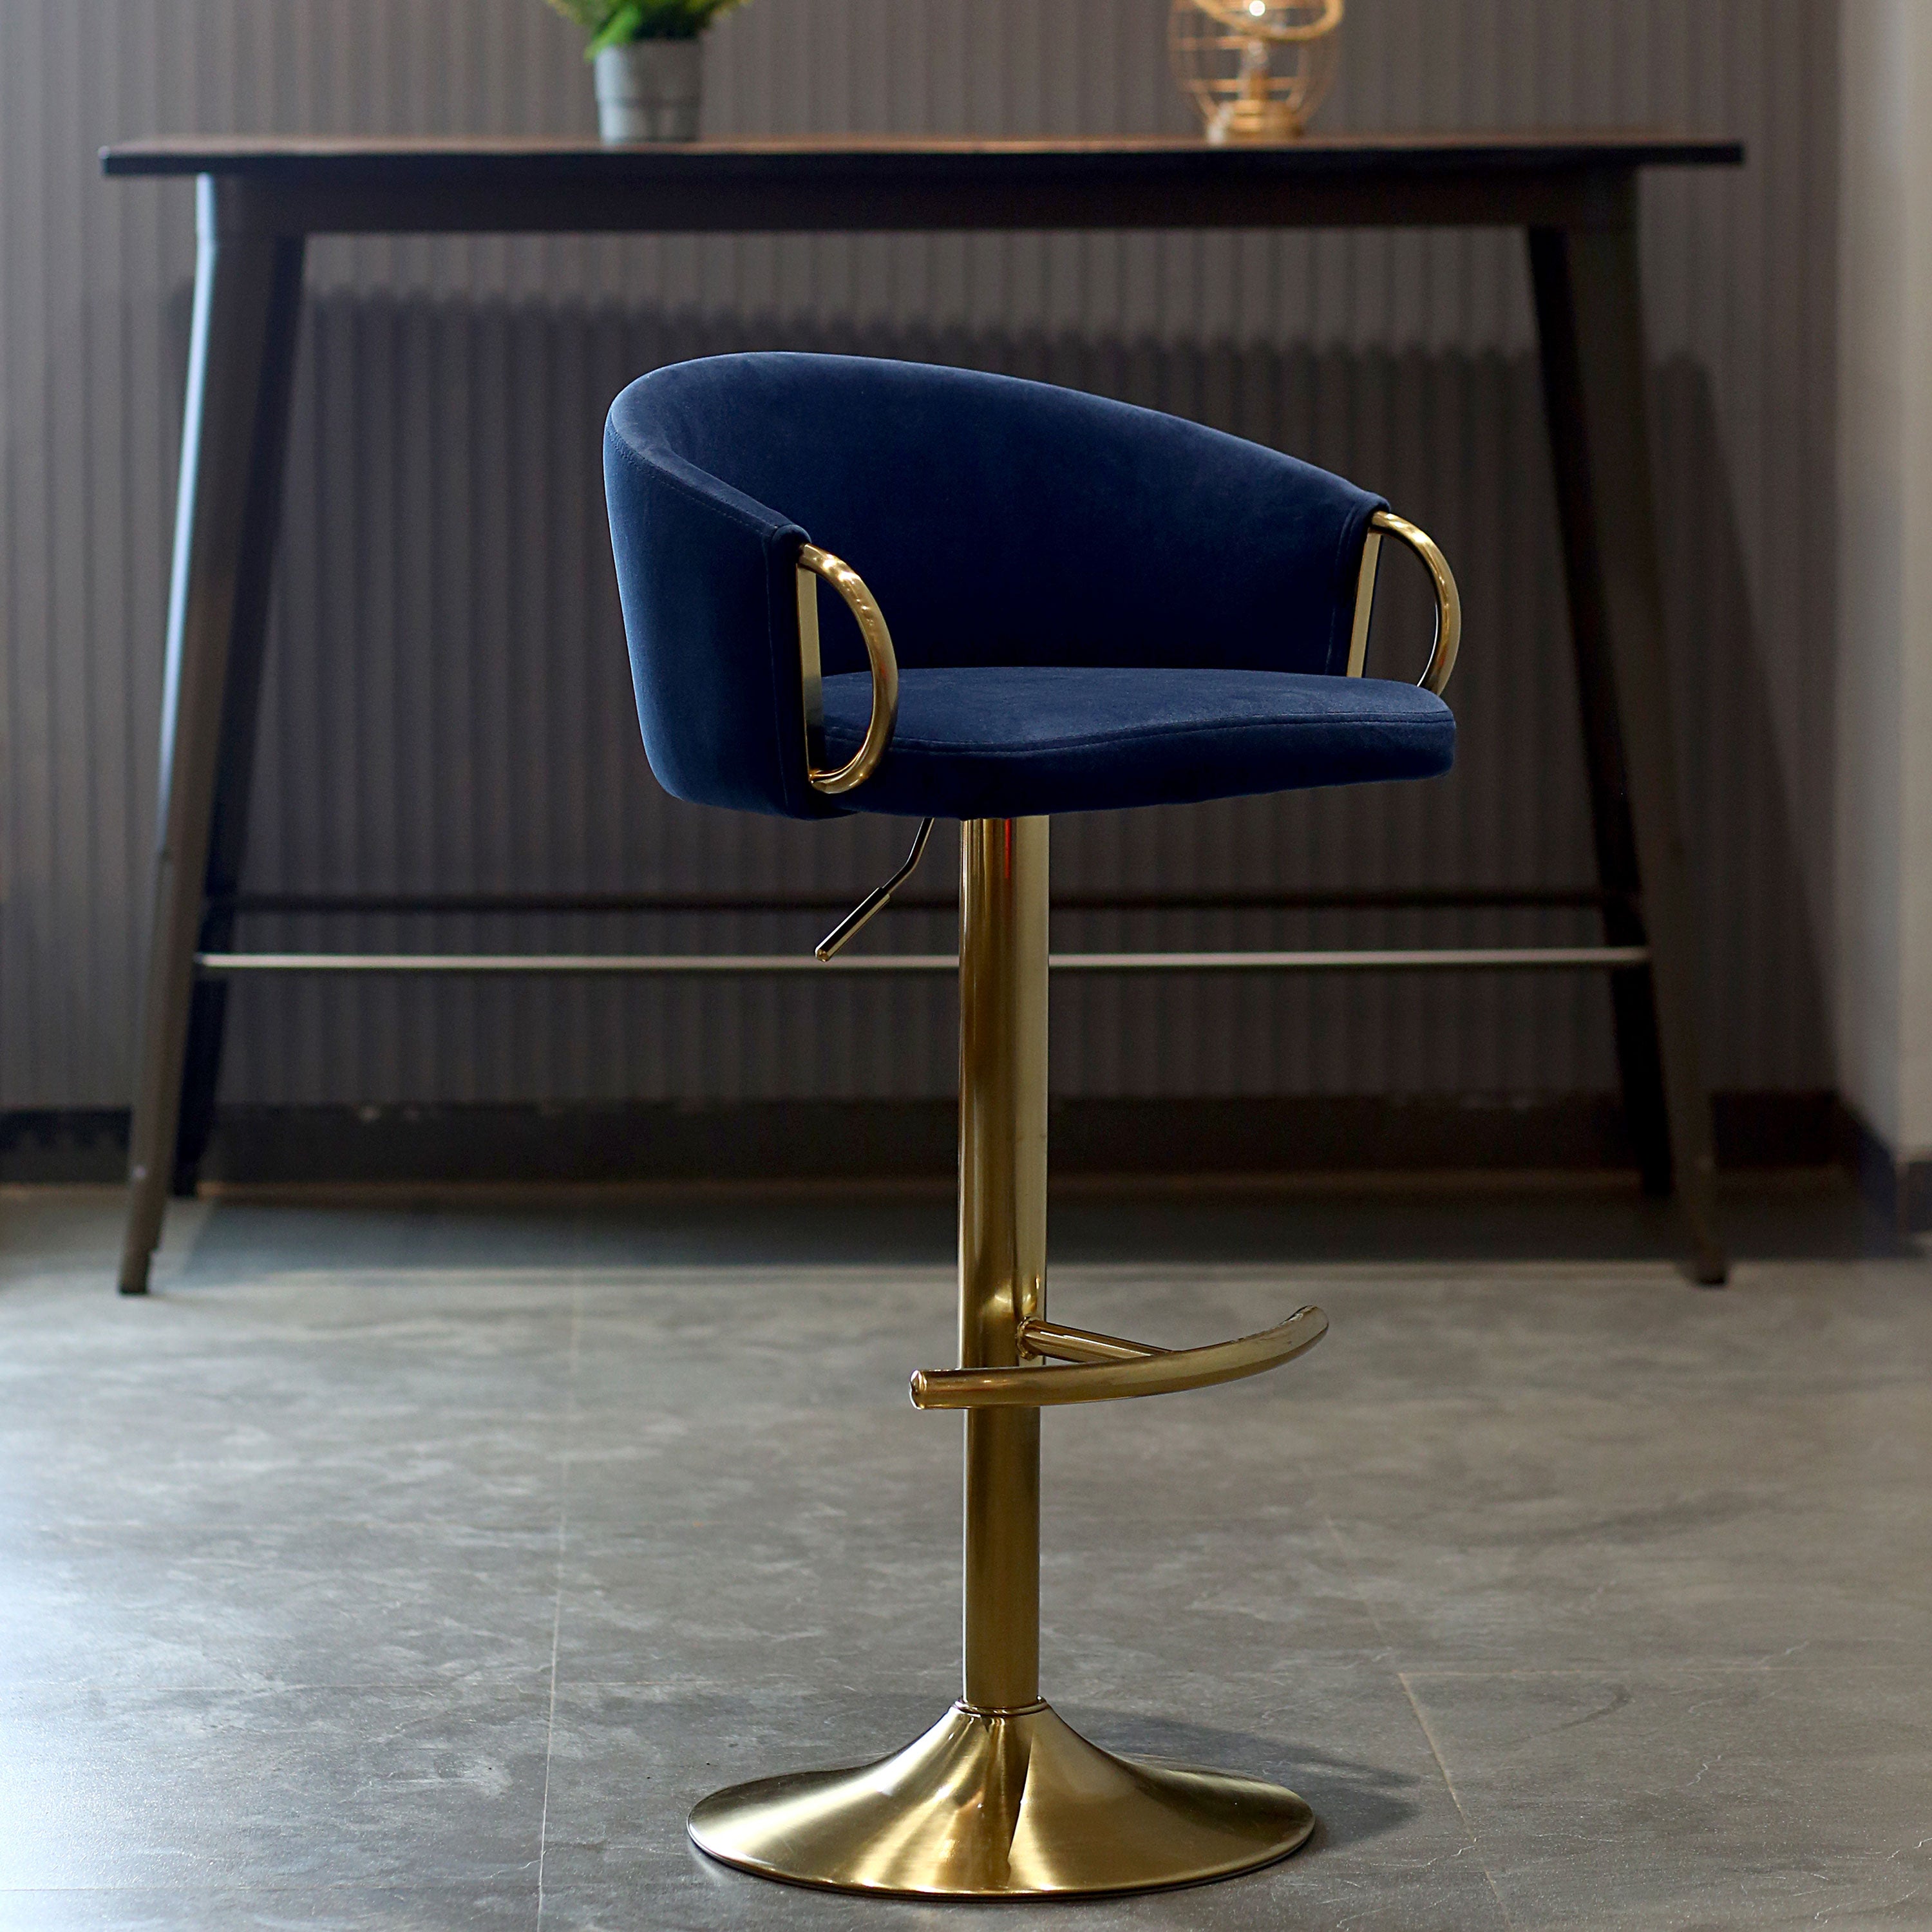 Violet Blue Upholstered Antique Barstool With Adjustable Height, Swivel & Velvet Cushion Seat